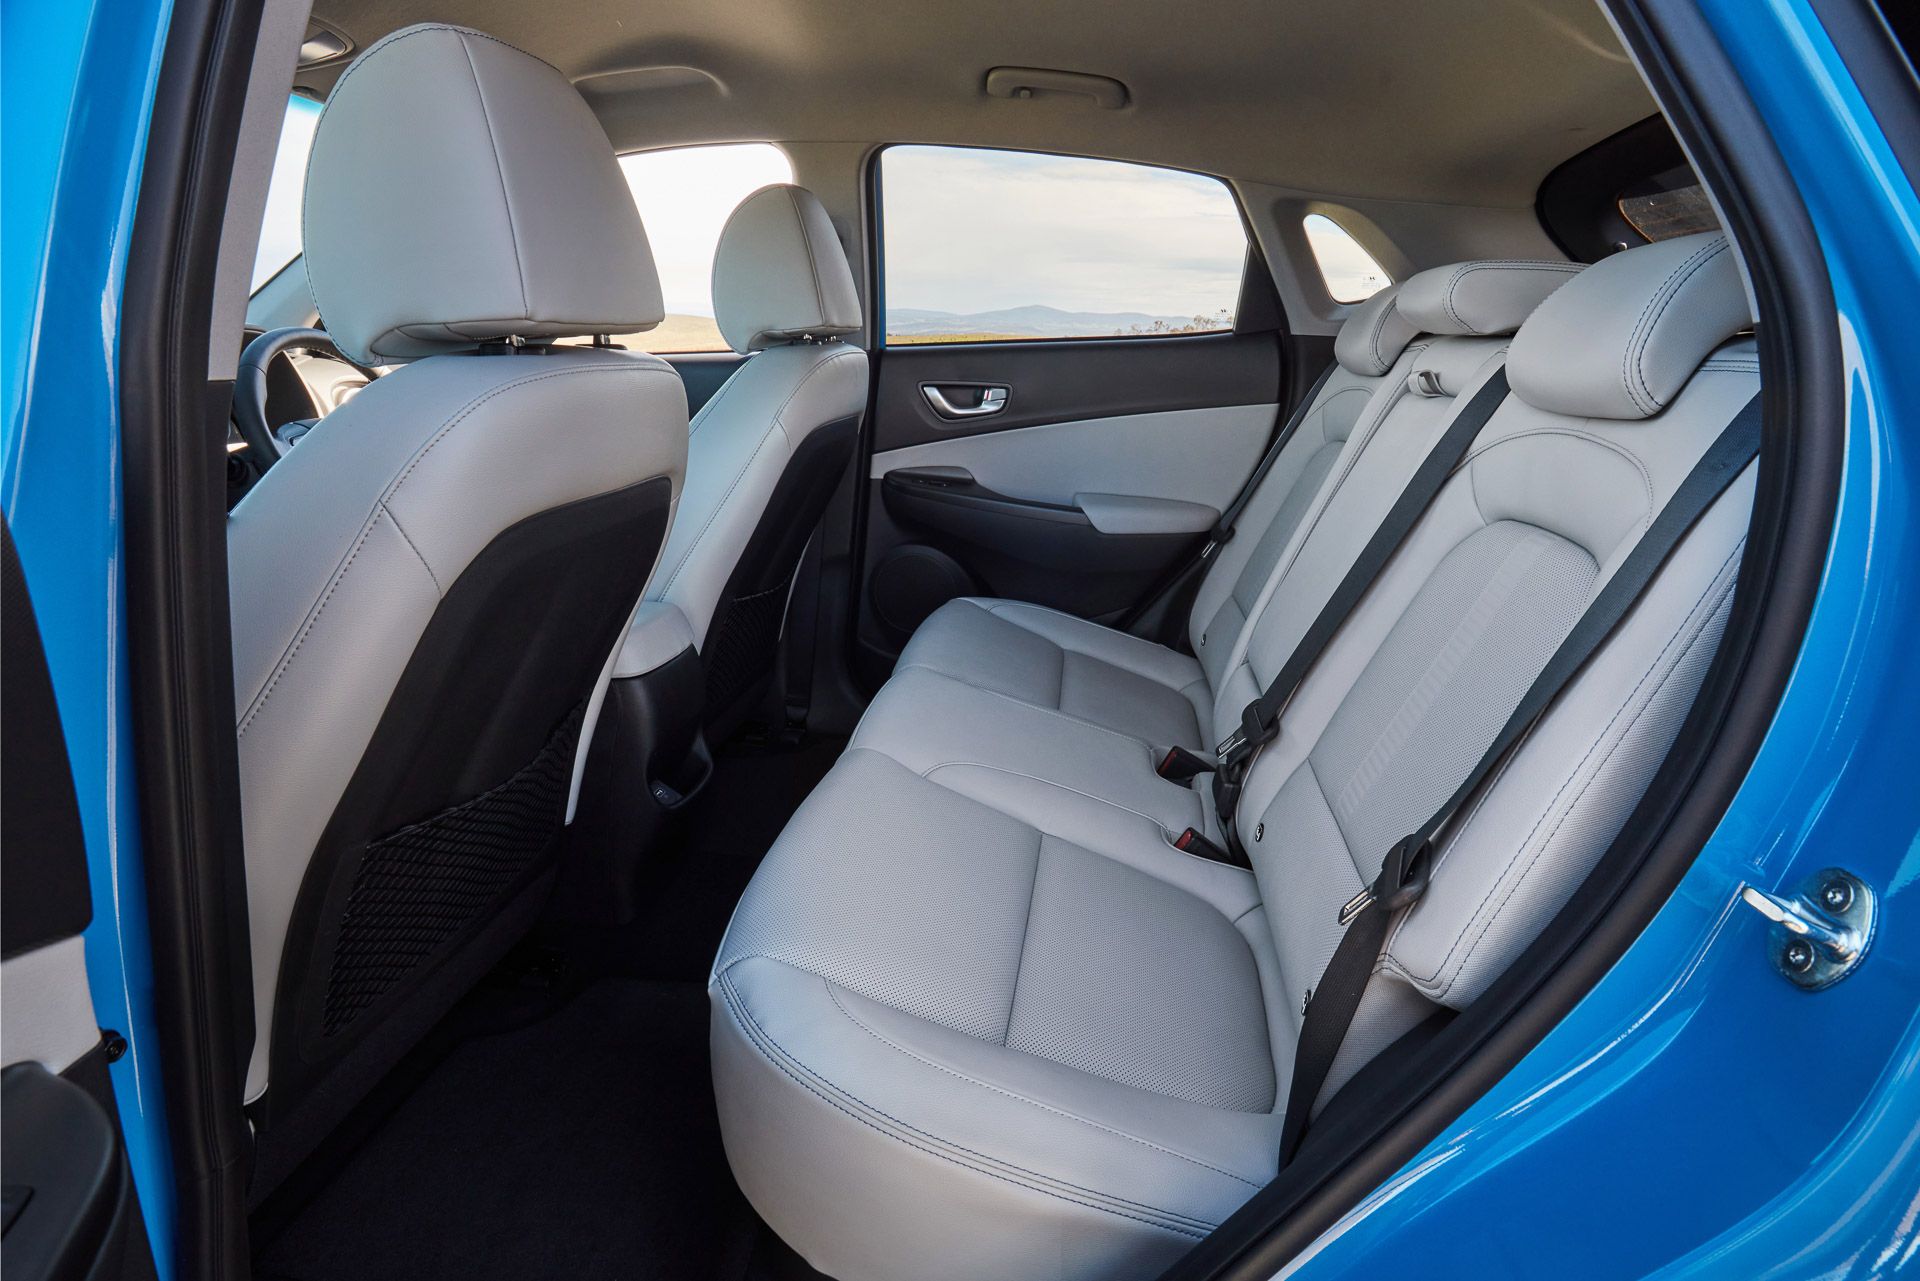 Hyundai Kona Electric digital speedometer and rear row interior seats